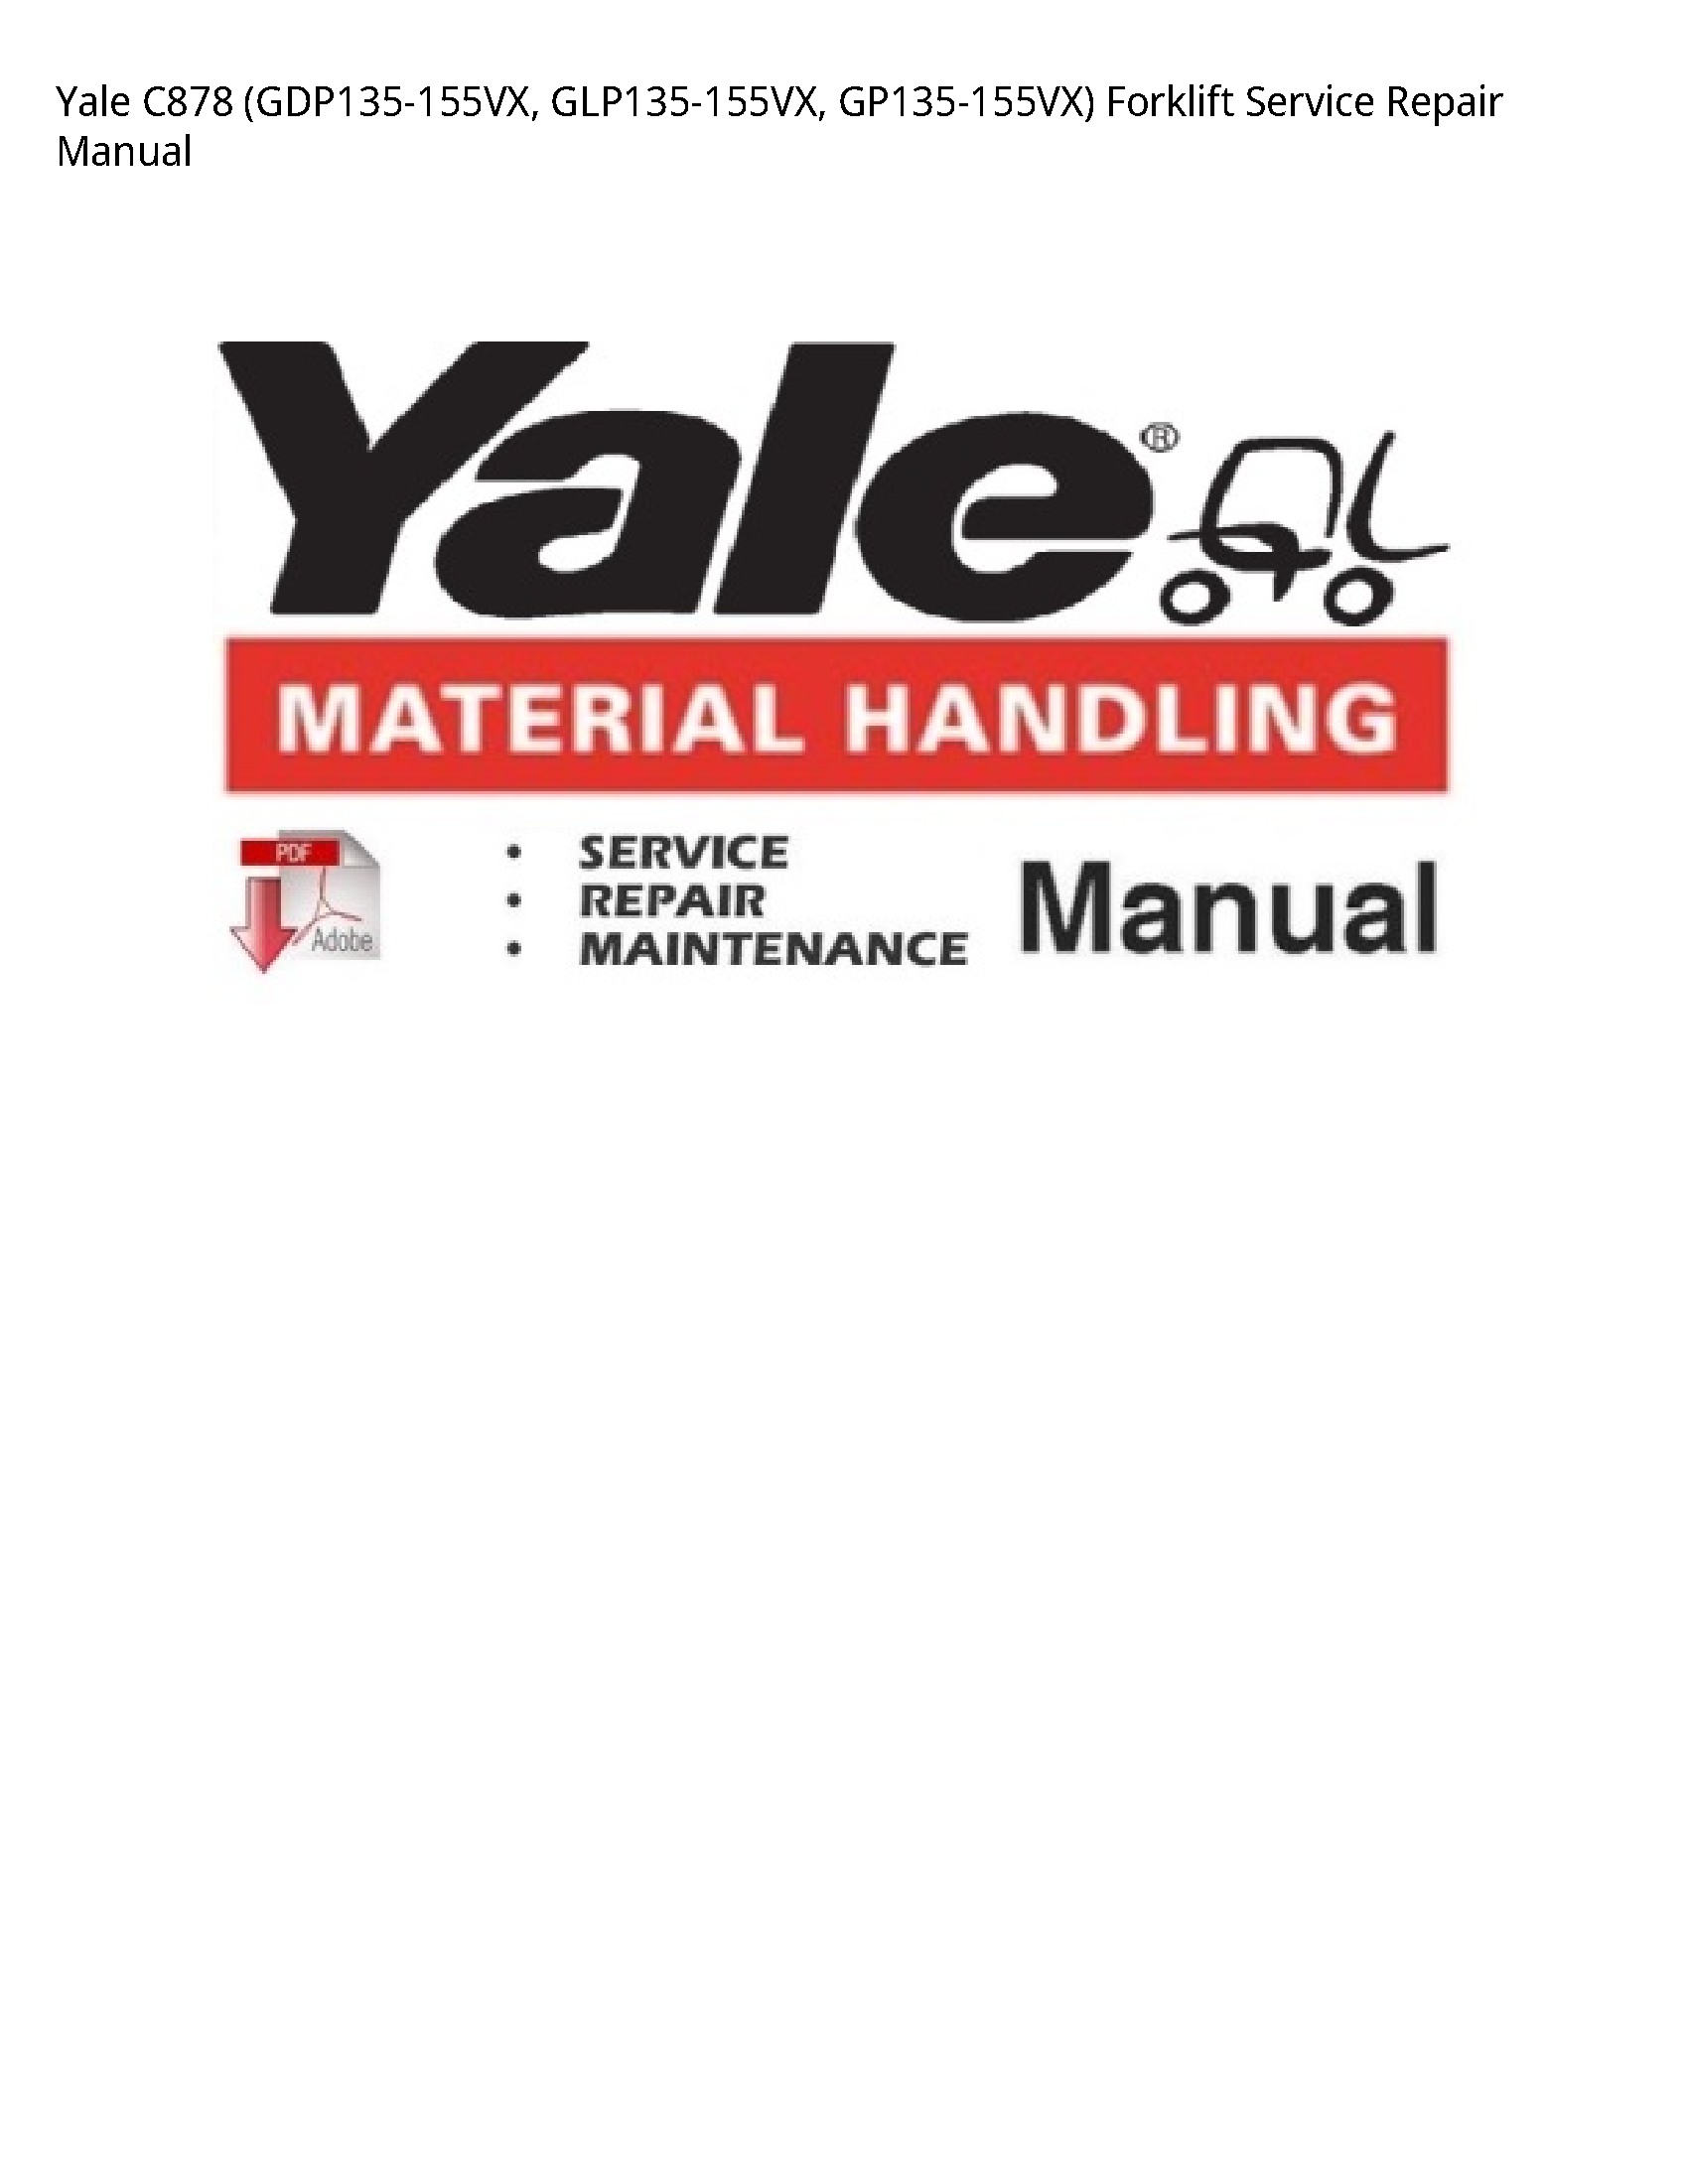 Yale C878 Forklift manual